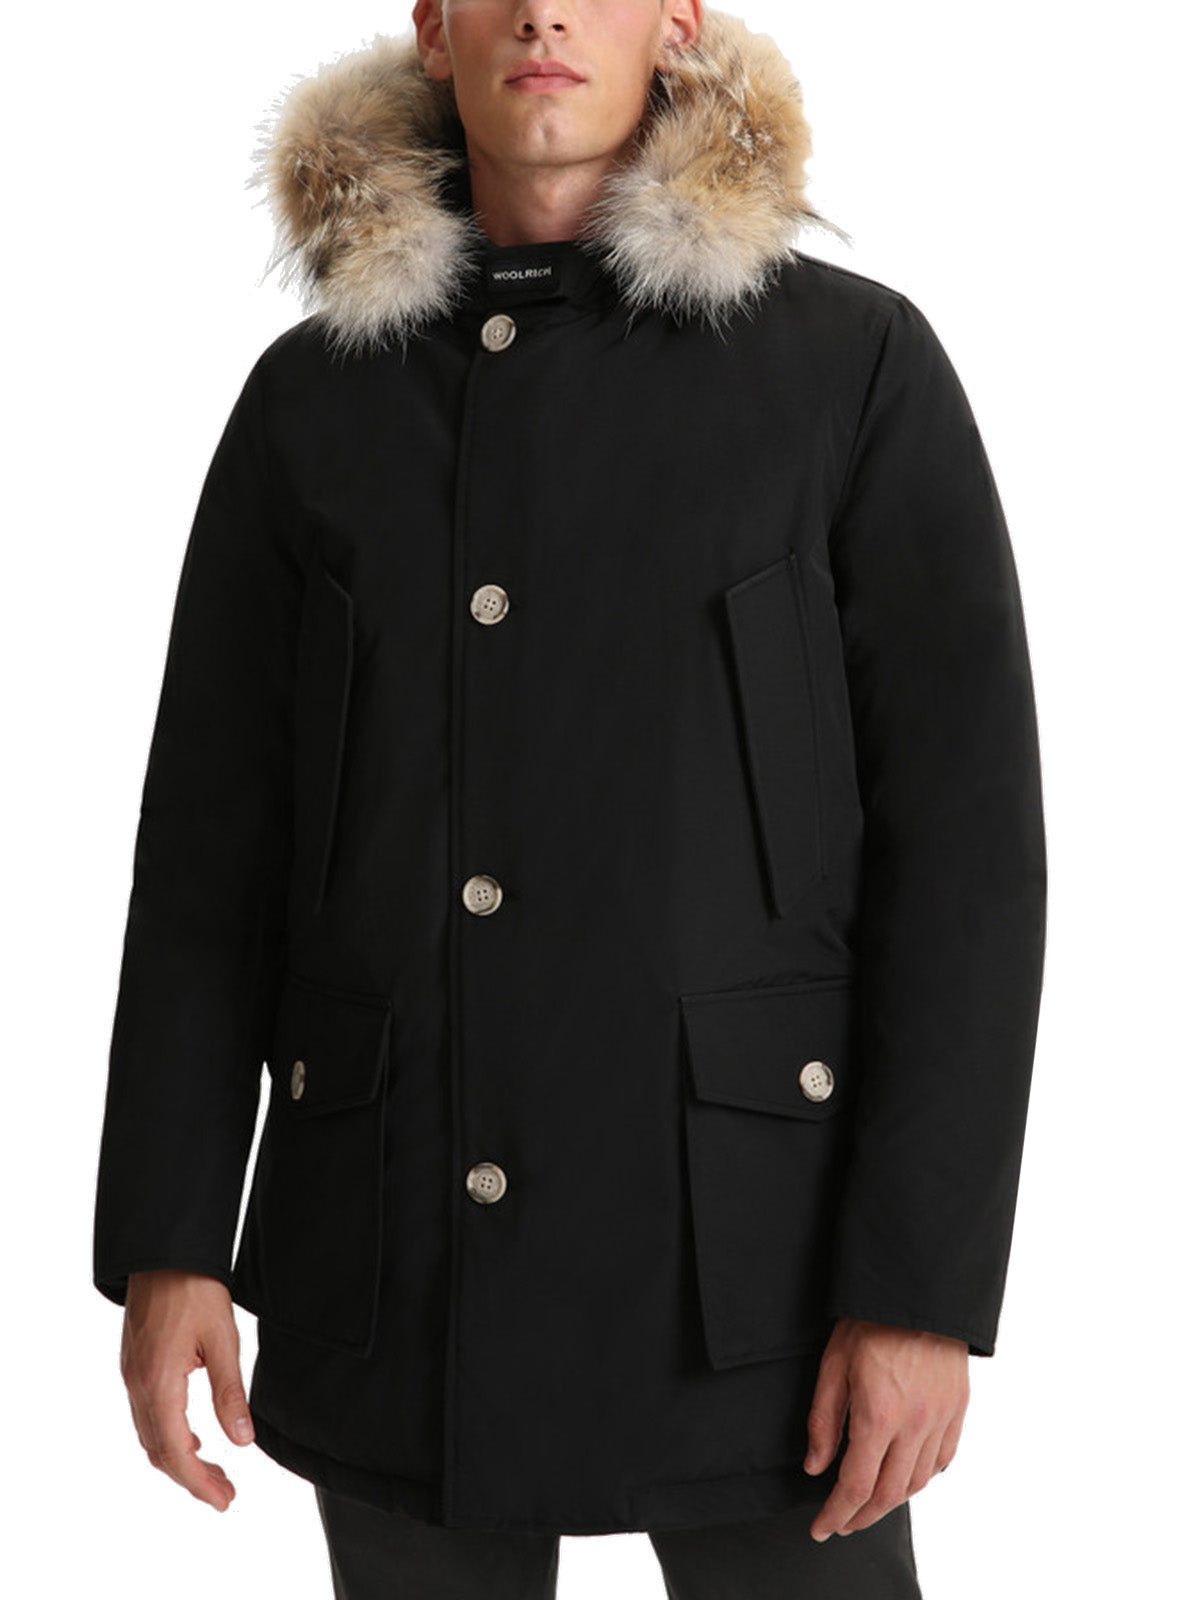 Giacche Uomo Woolrich - Arctic Detachable Fur Parka - Nero